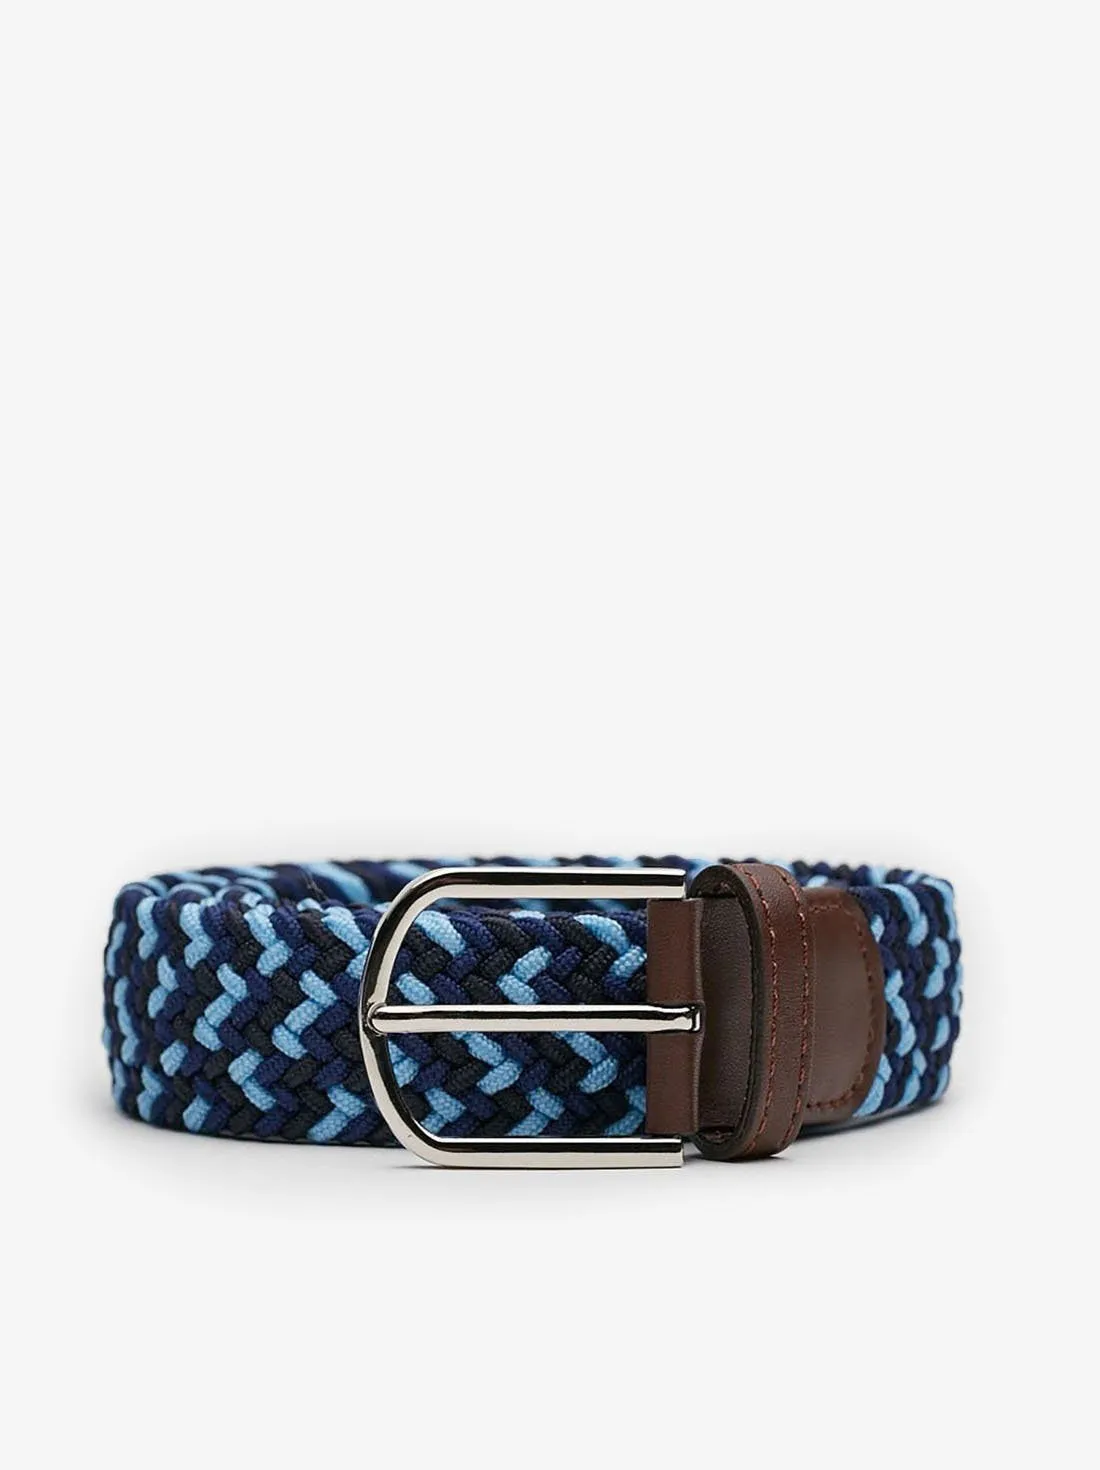 Blue & Light Blue Braided Belt